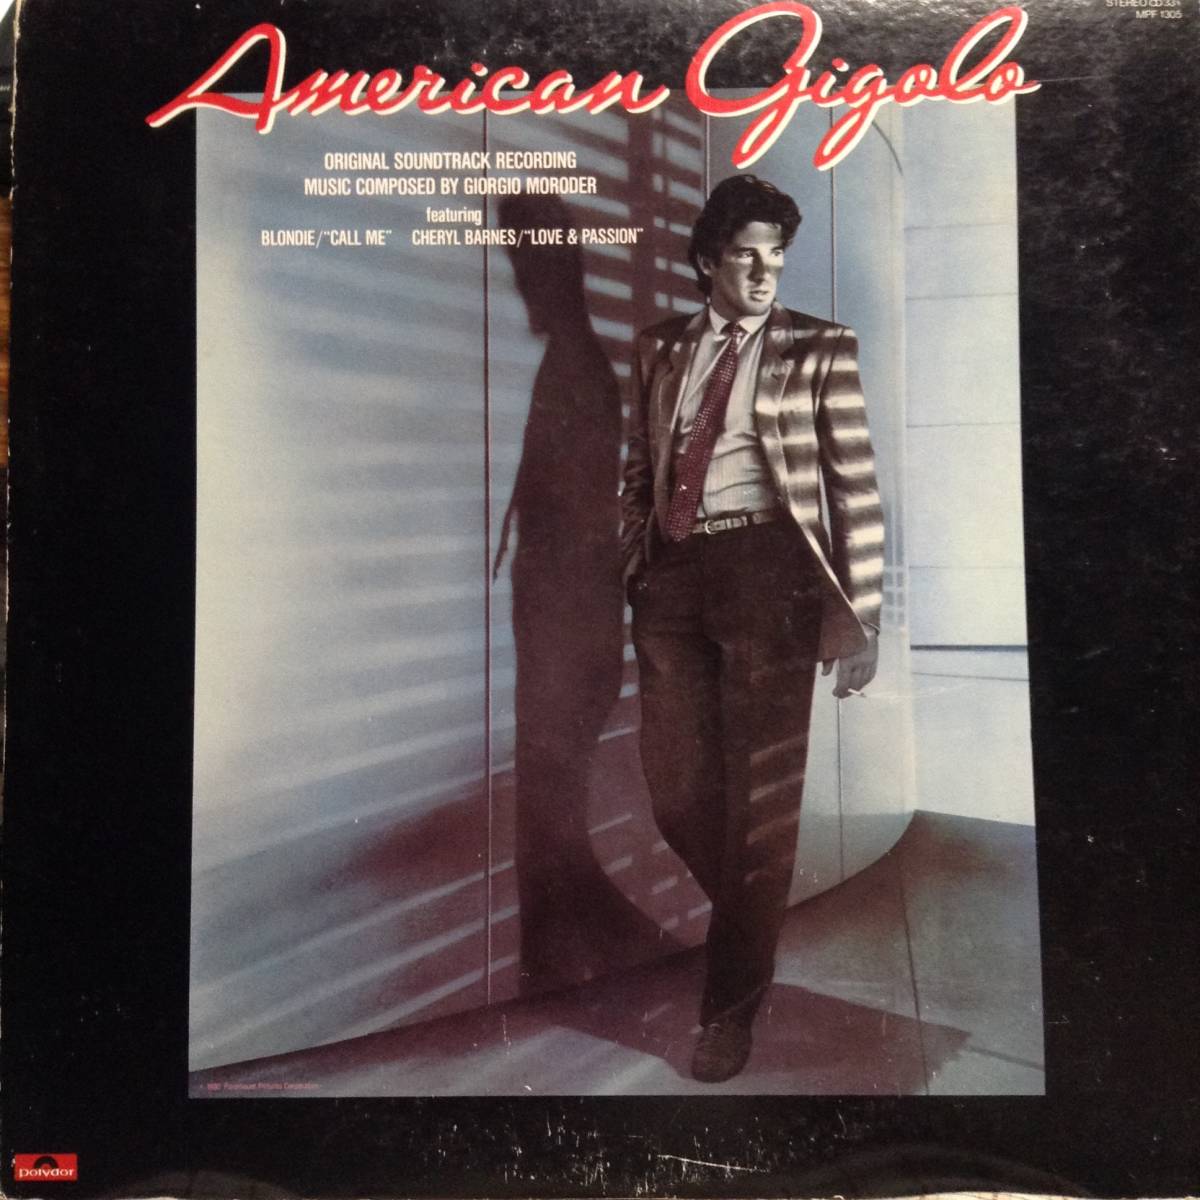  american *jigoro| original * soundtrack (joru geo *moroda-, Blondie -) (LP record ) American Gigolo|Giorgio Moroder